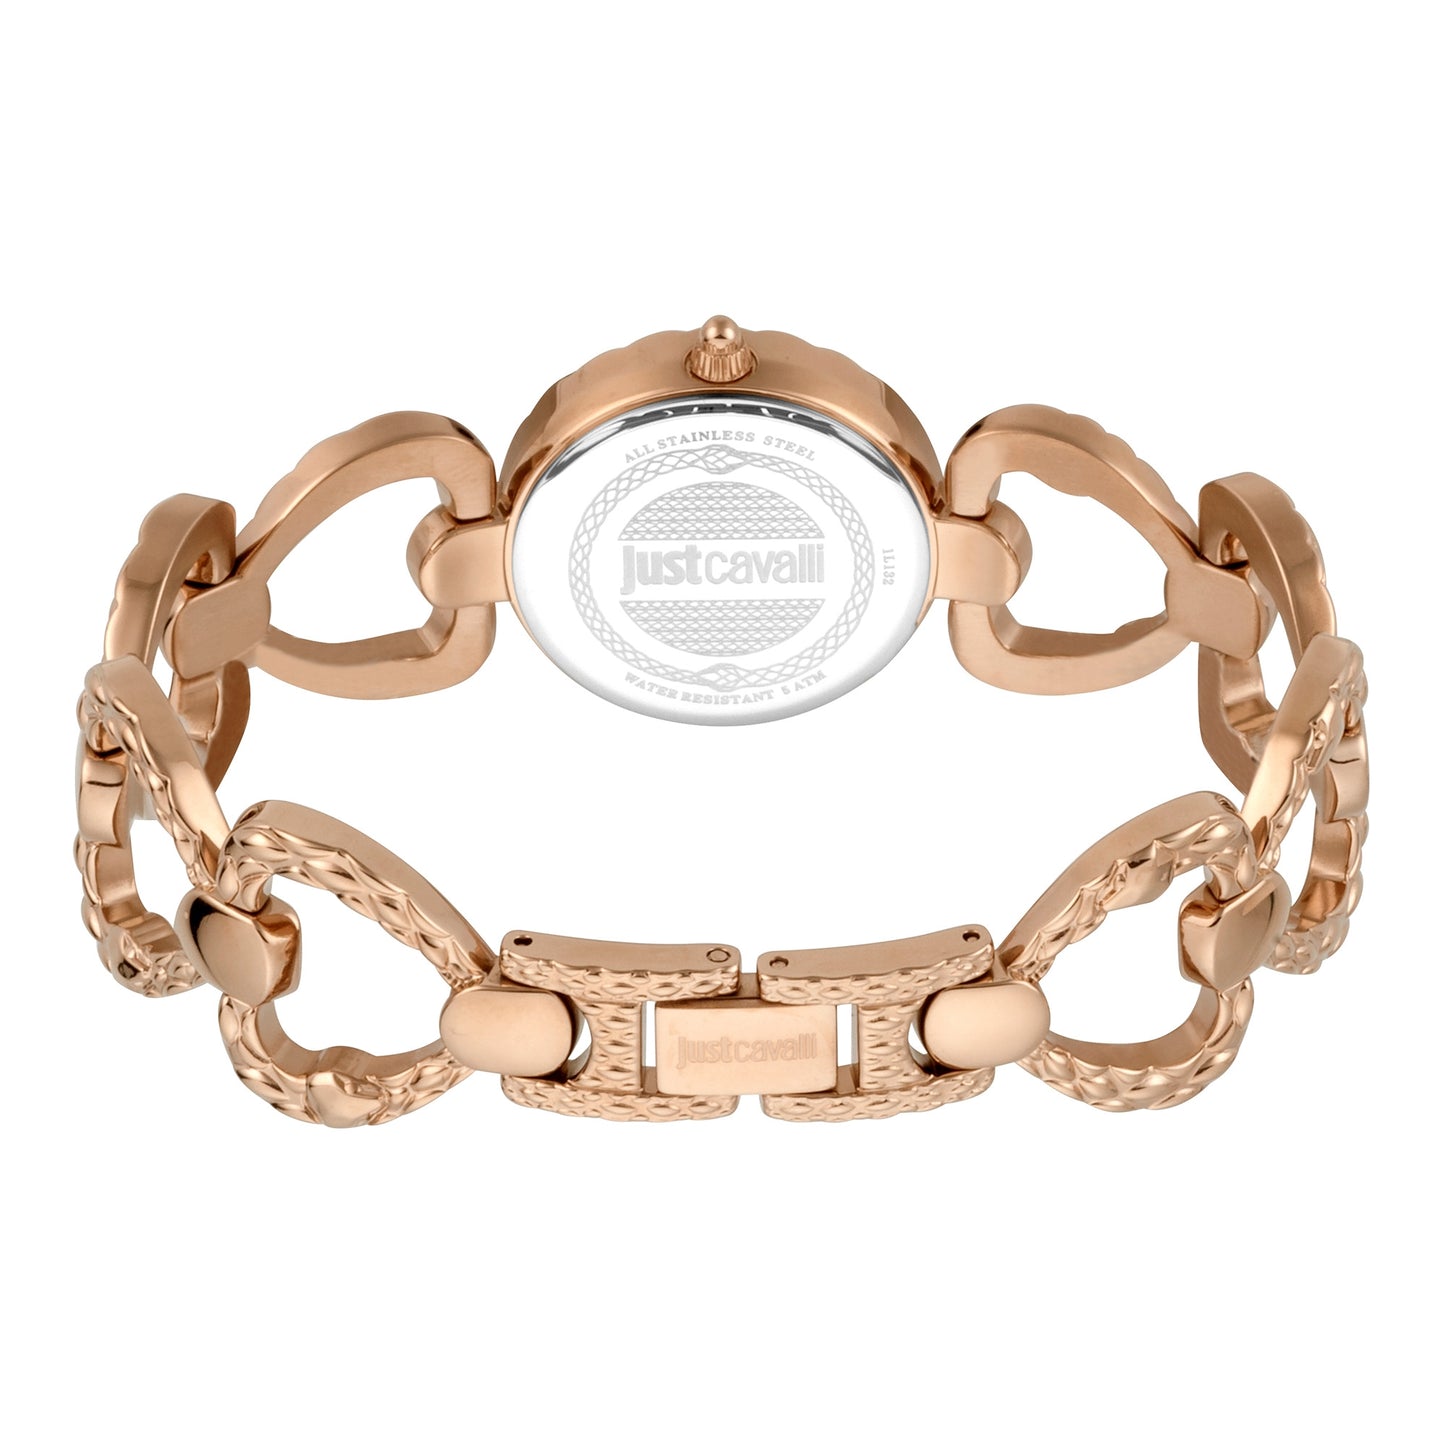 JUST CAVALLI Link Bracelet Steel Rose Gold Watch